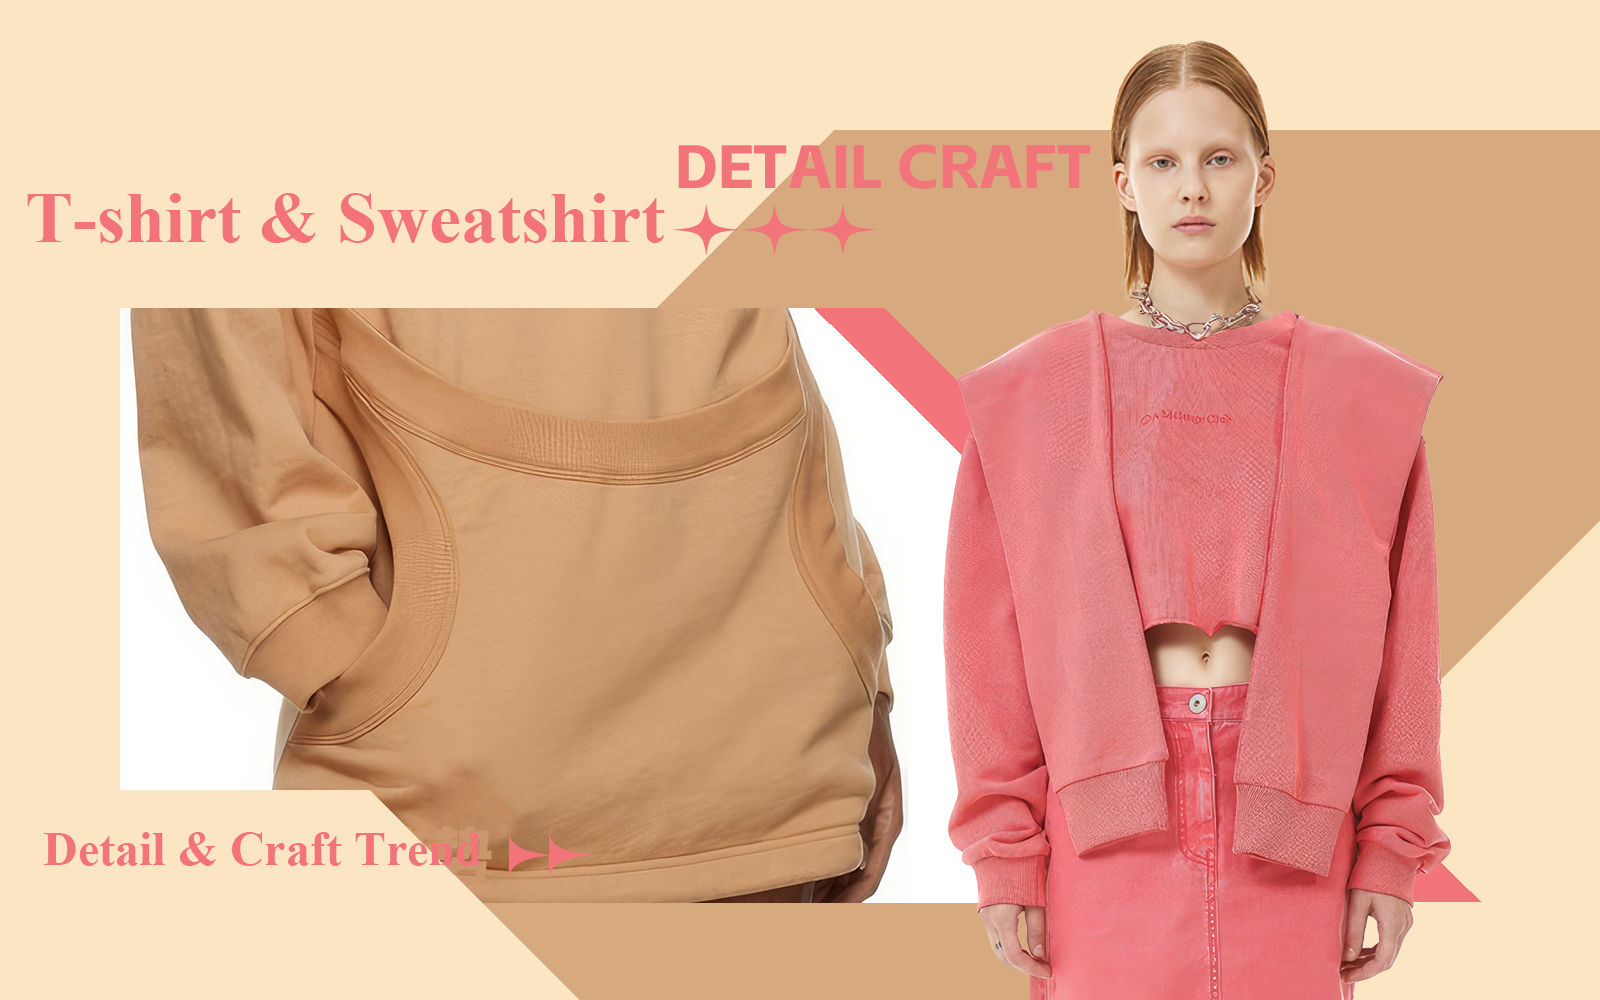 The Detail & Craft Trend for Women's T-shirt & Sweatshirt